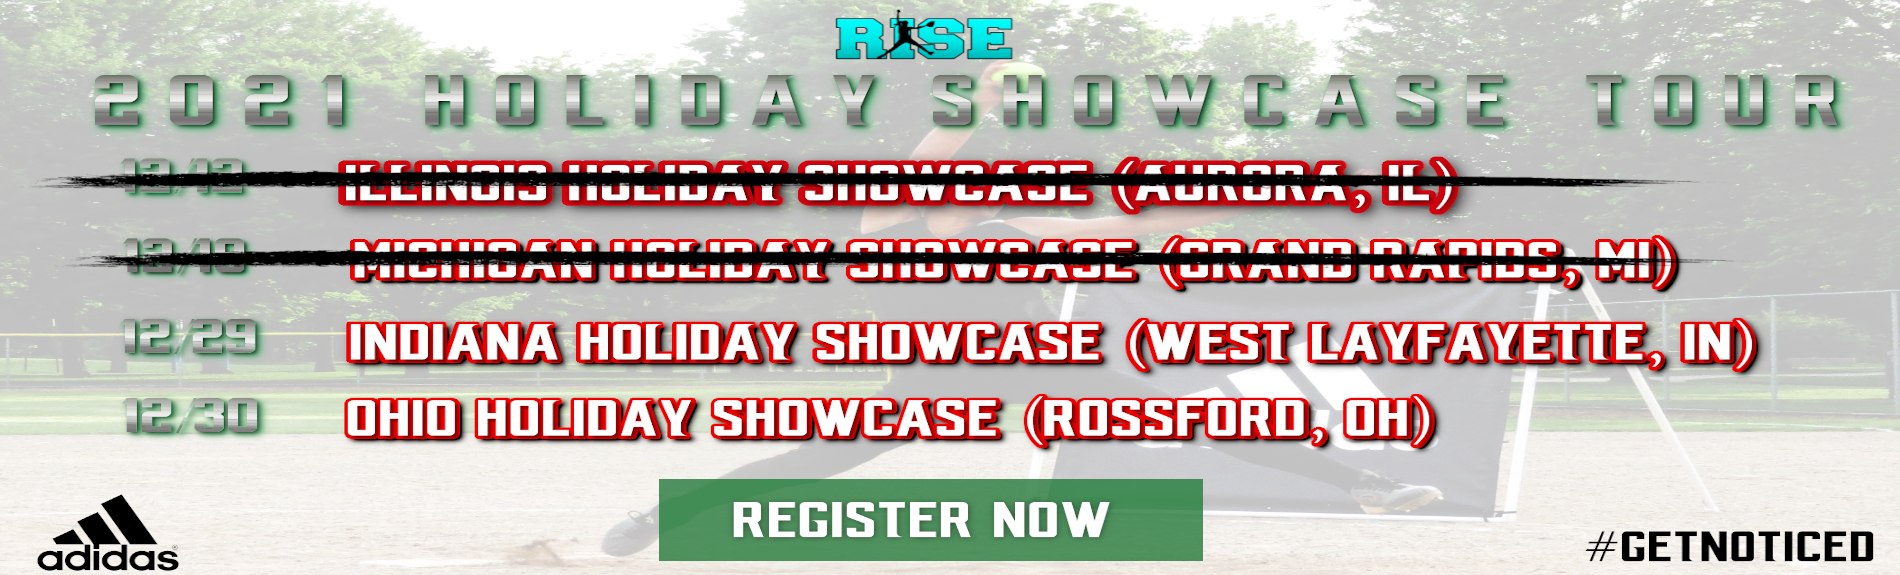 2021 RISE-Holiday Showcase Tour